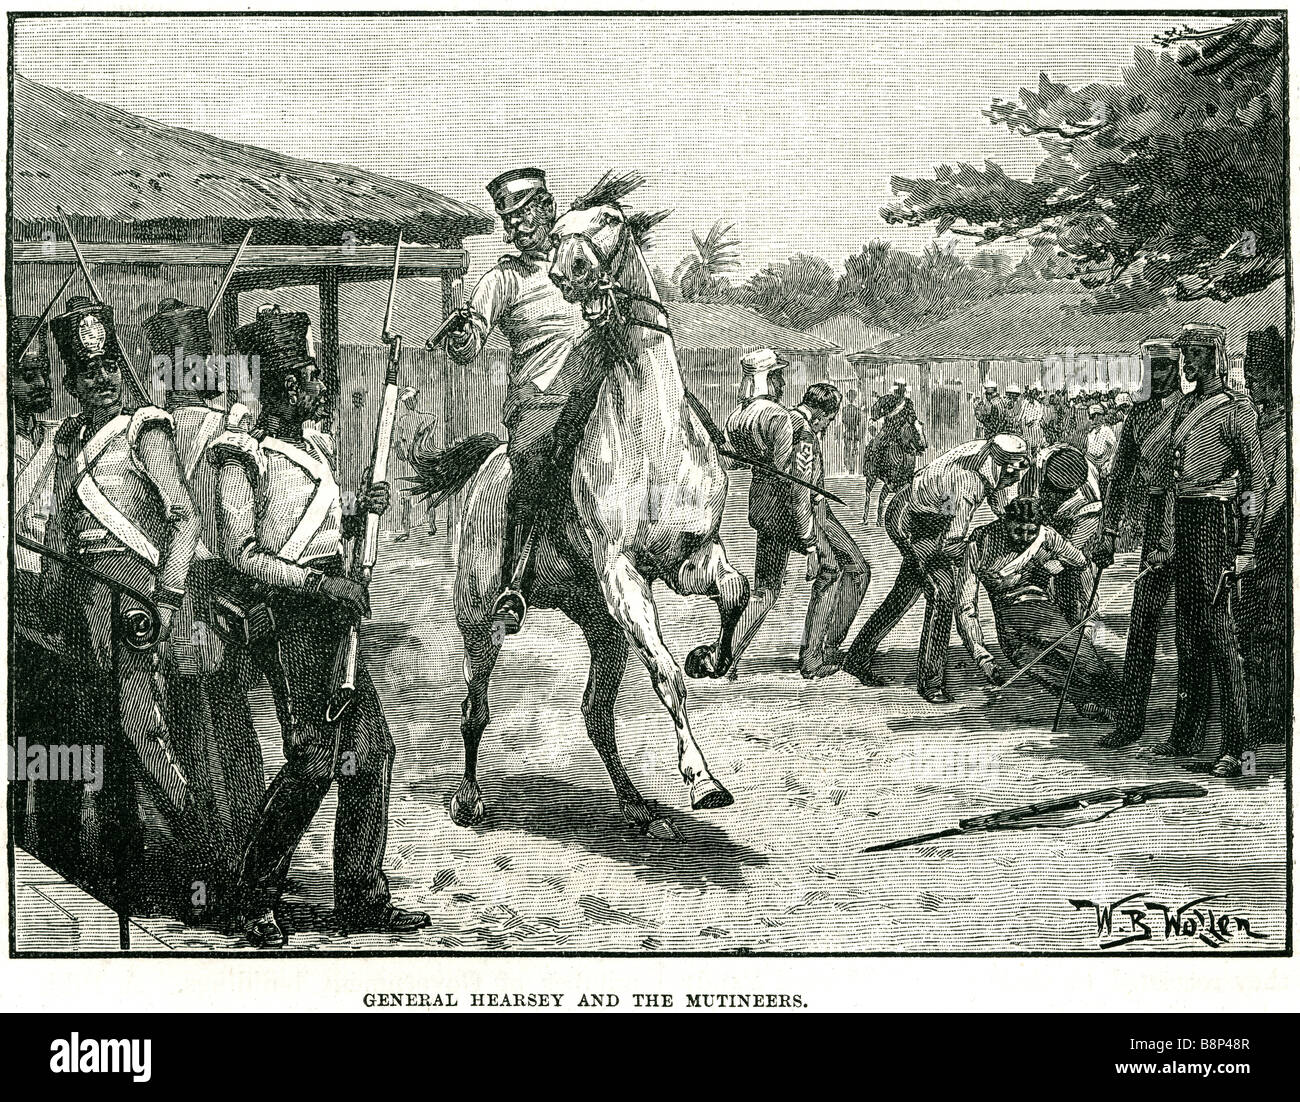 general hearsey mutineers Indian Rebellion 1857 British East India Company Meerut Stock Photo